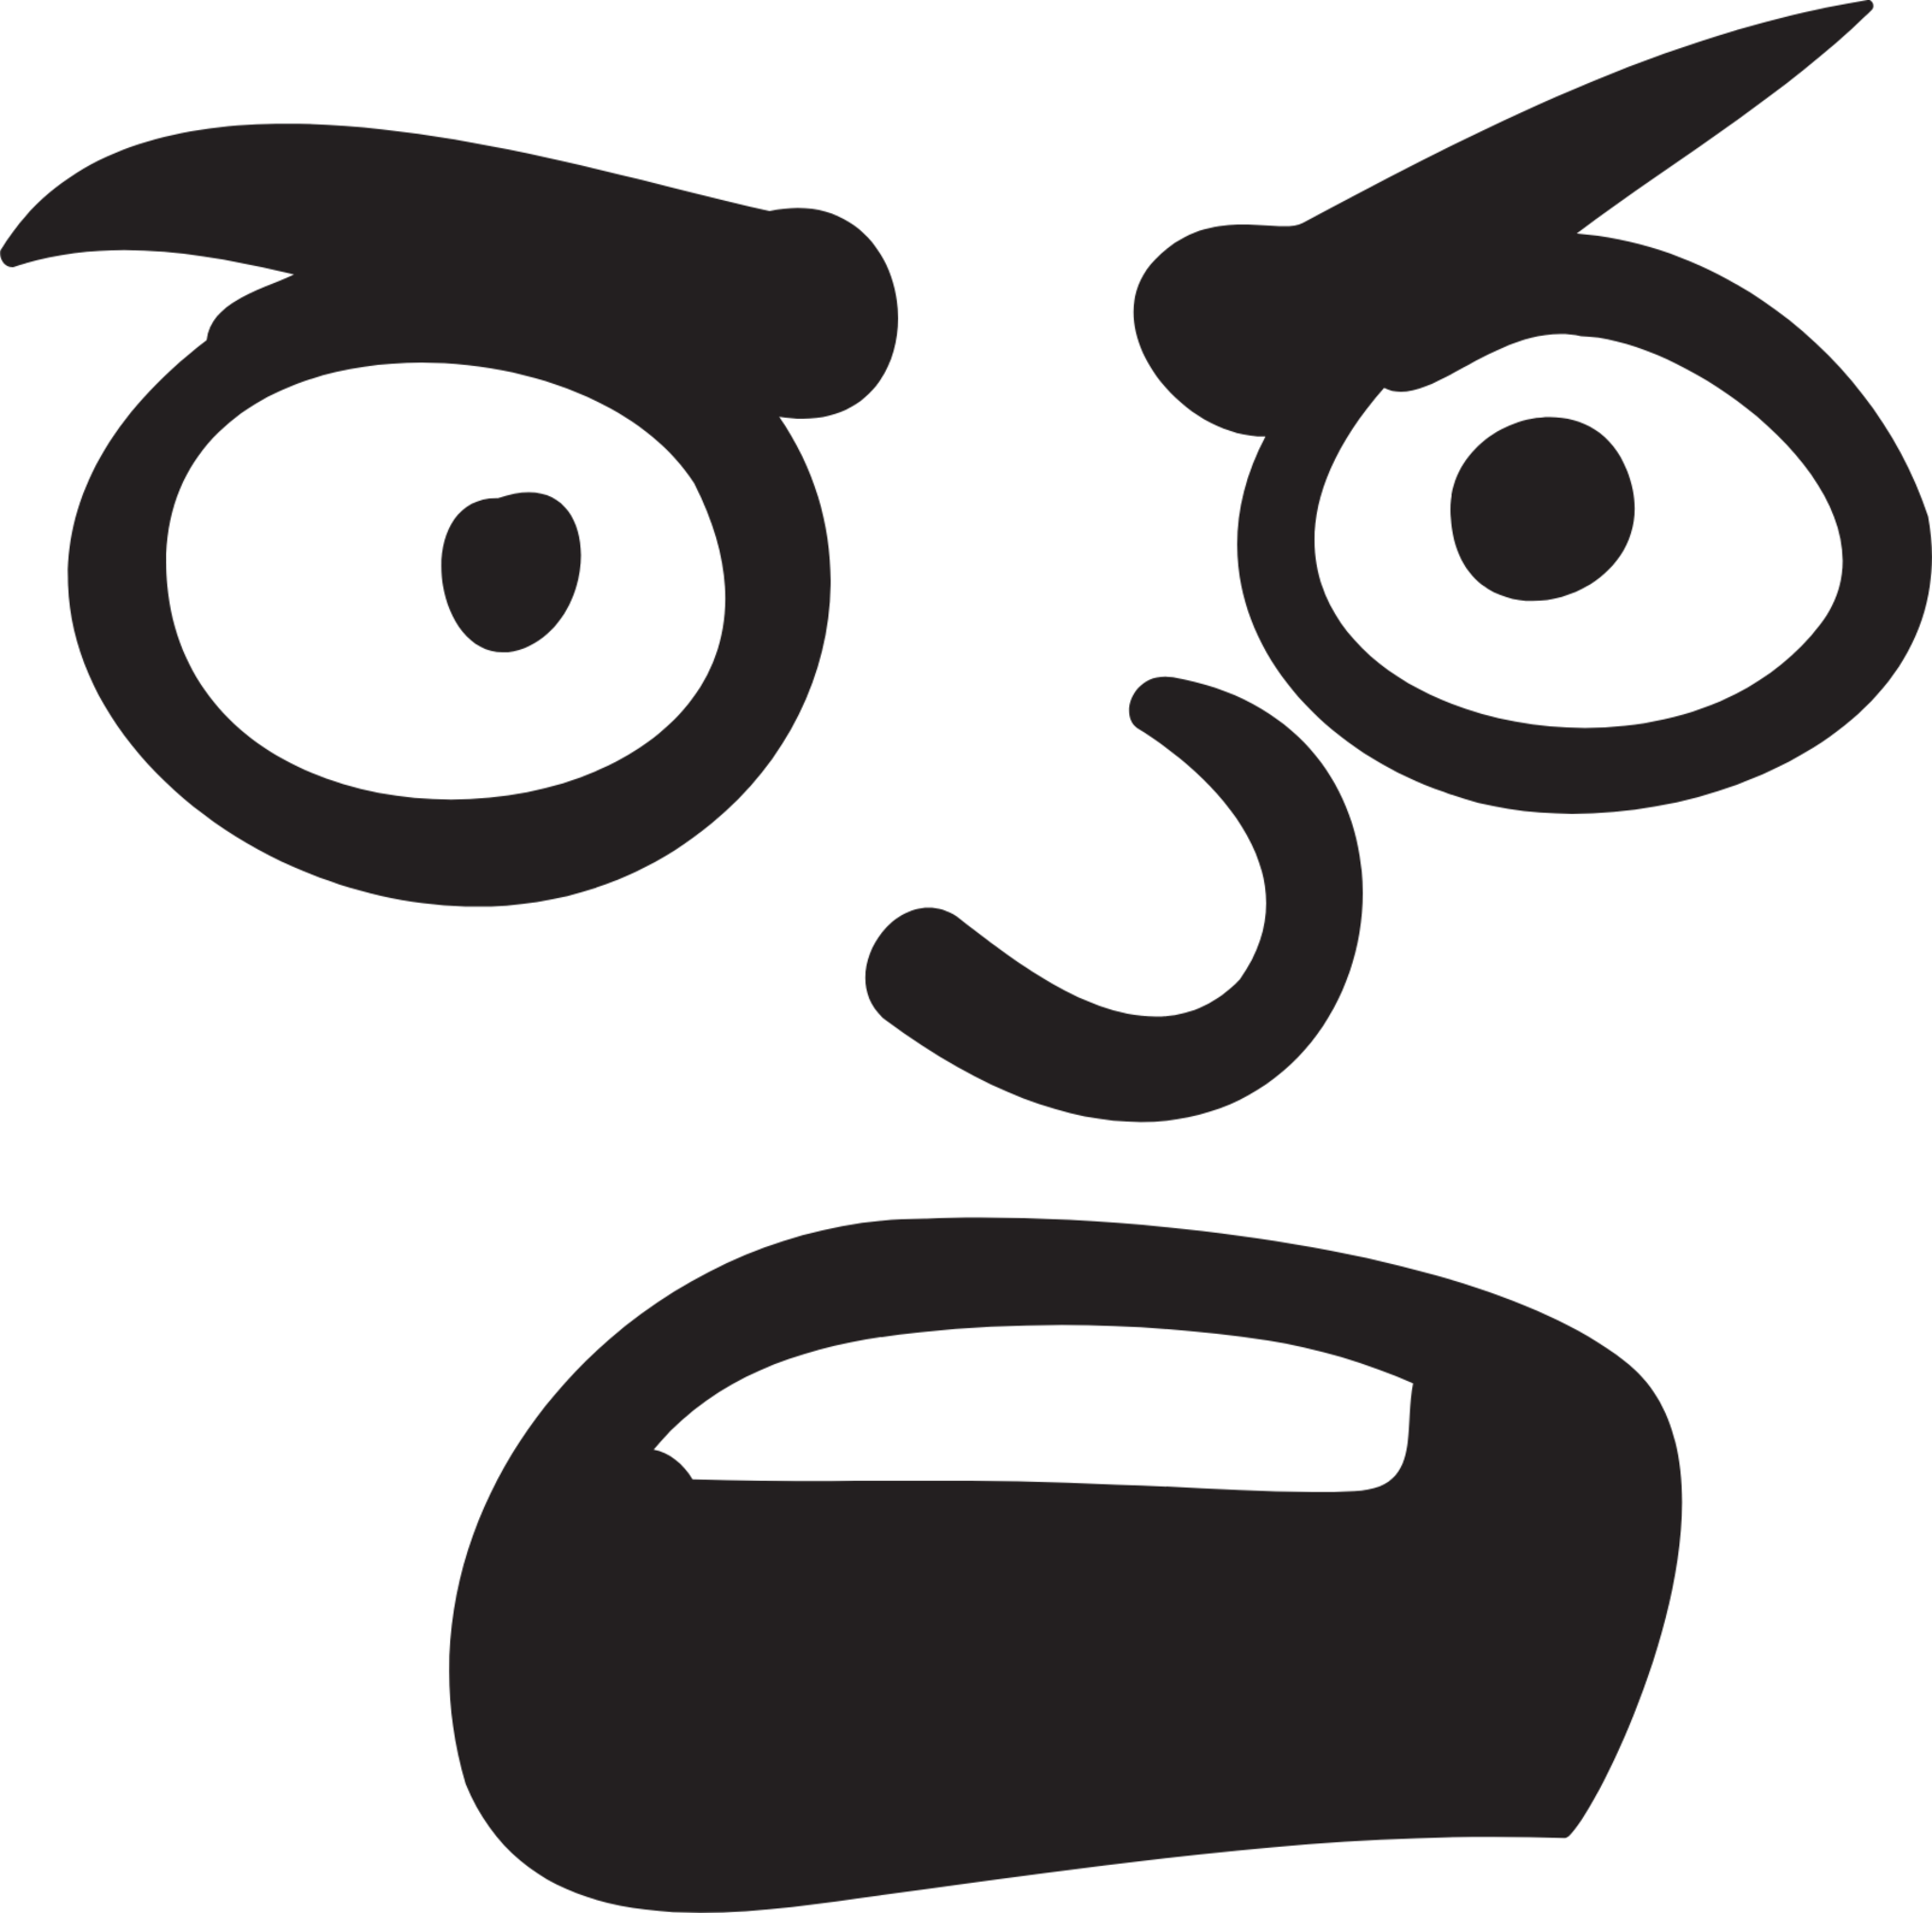 Rage face illustration